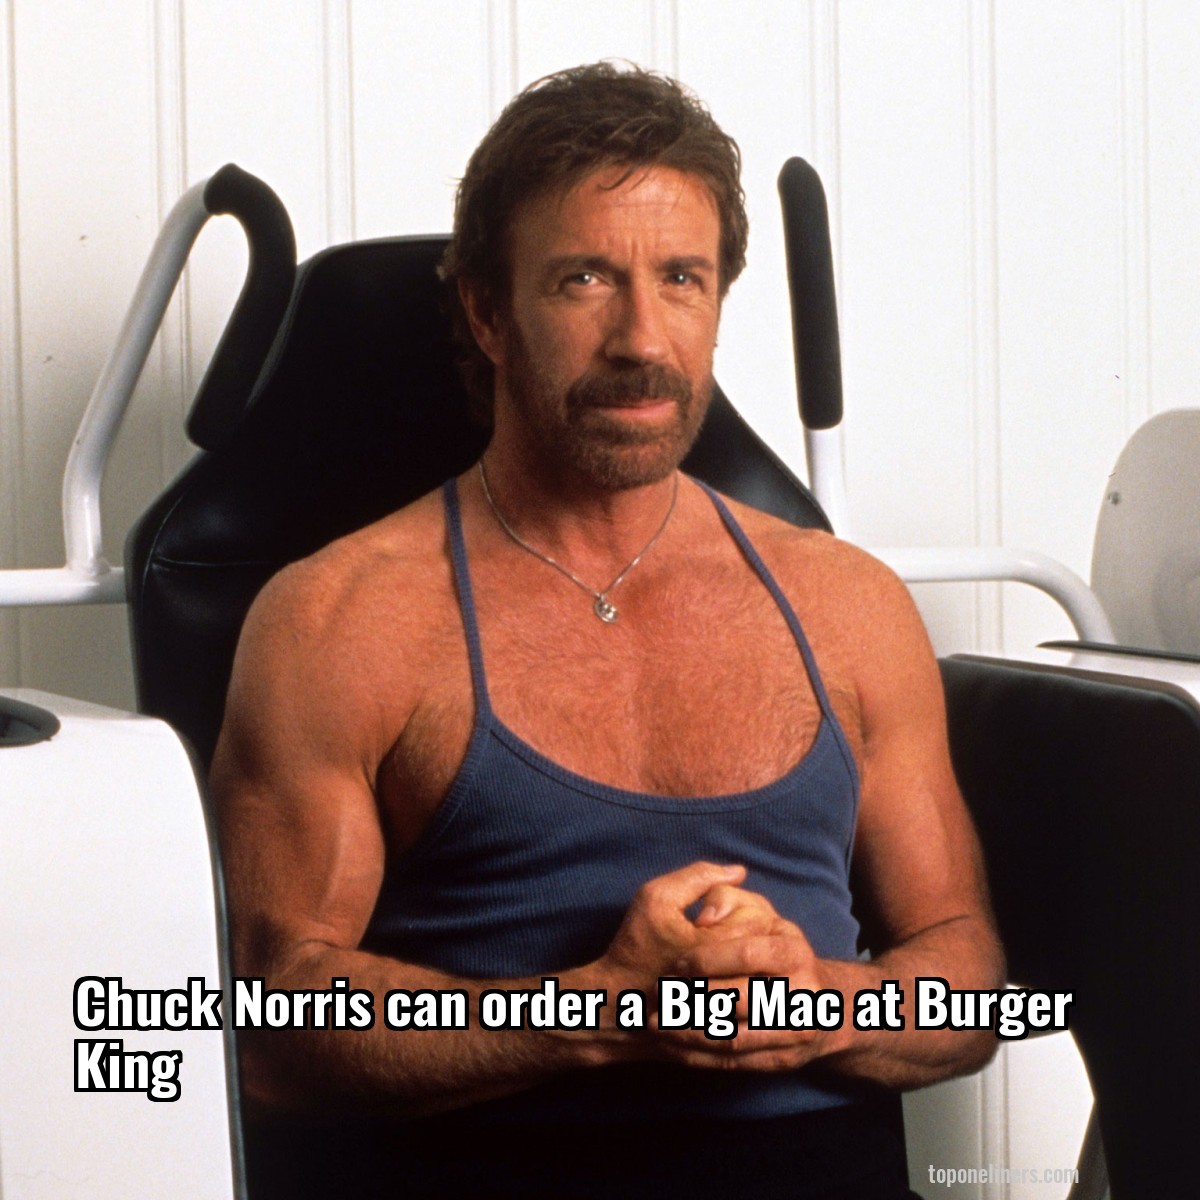 Chuck Norris can order a Big Mac at Burger King